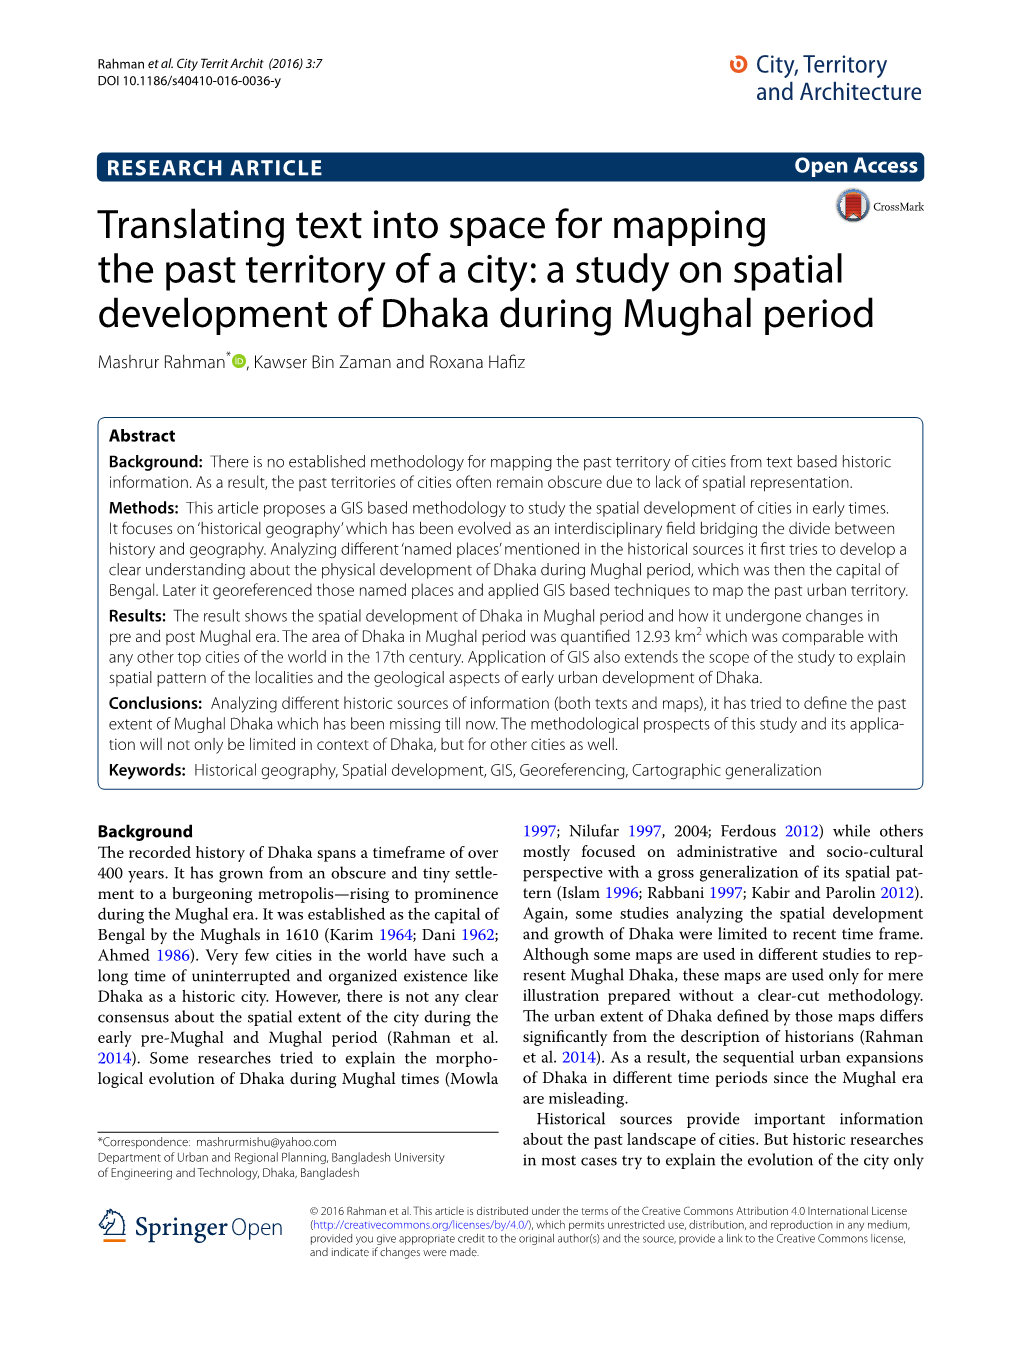 A Study on Spatial Development of Dhaka During Mughal Period Mashrur Rahman* , Kawser Bin Zaman and Roxana Hafiz